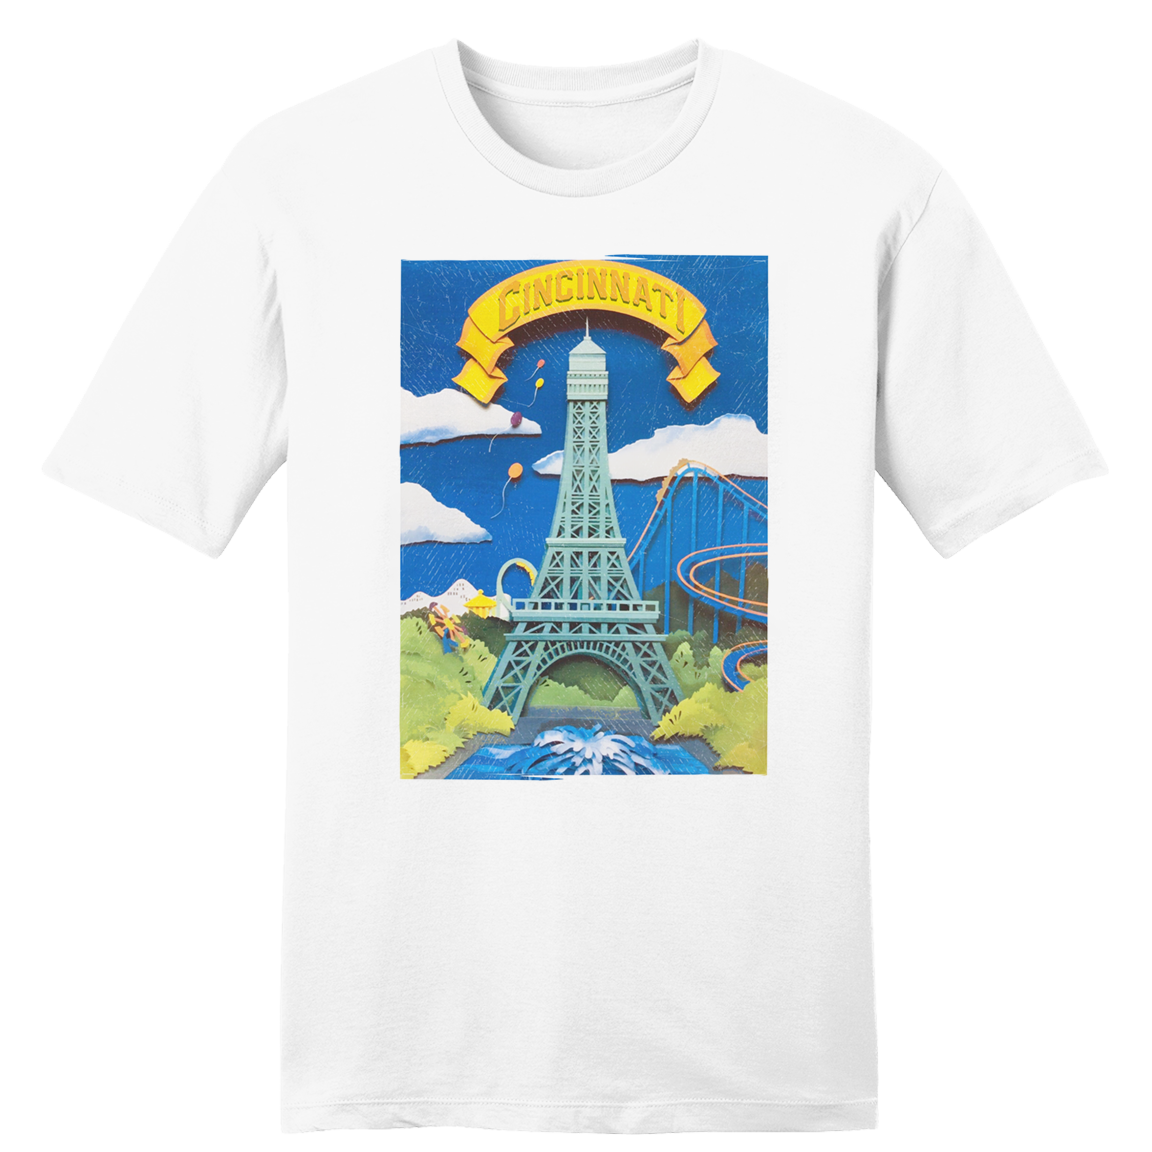 The Eiffel Tower Cincinnati tee